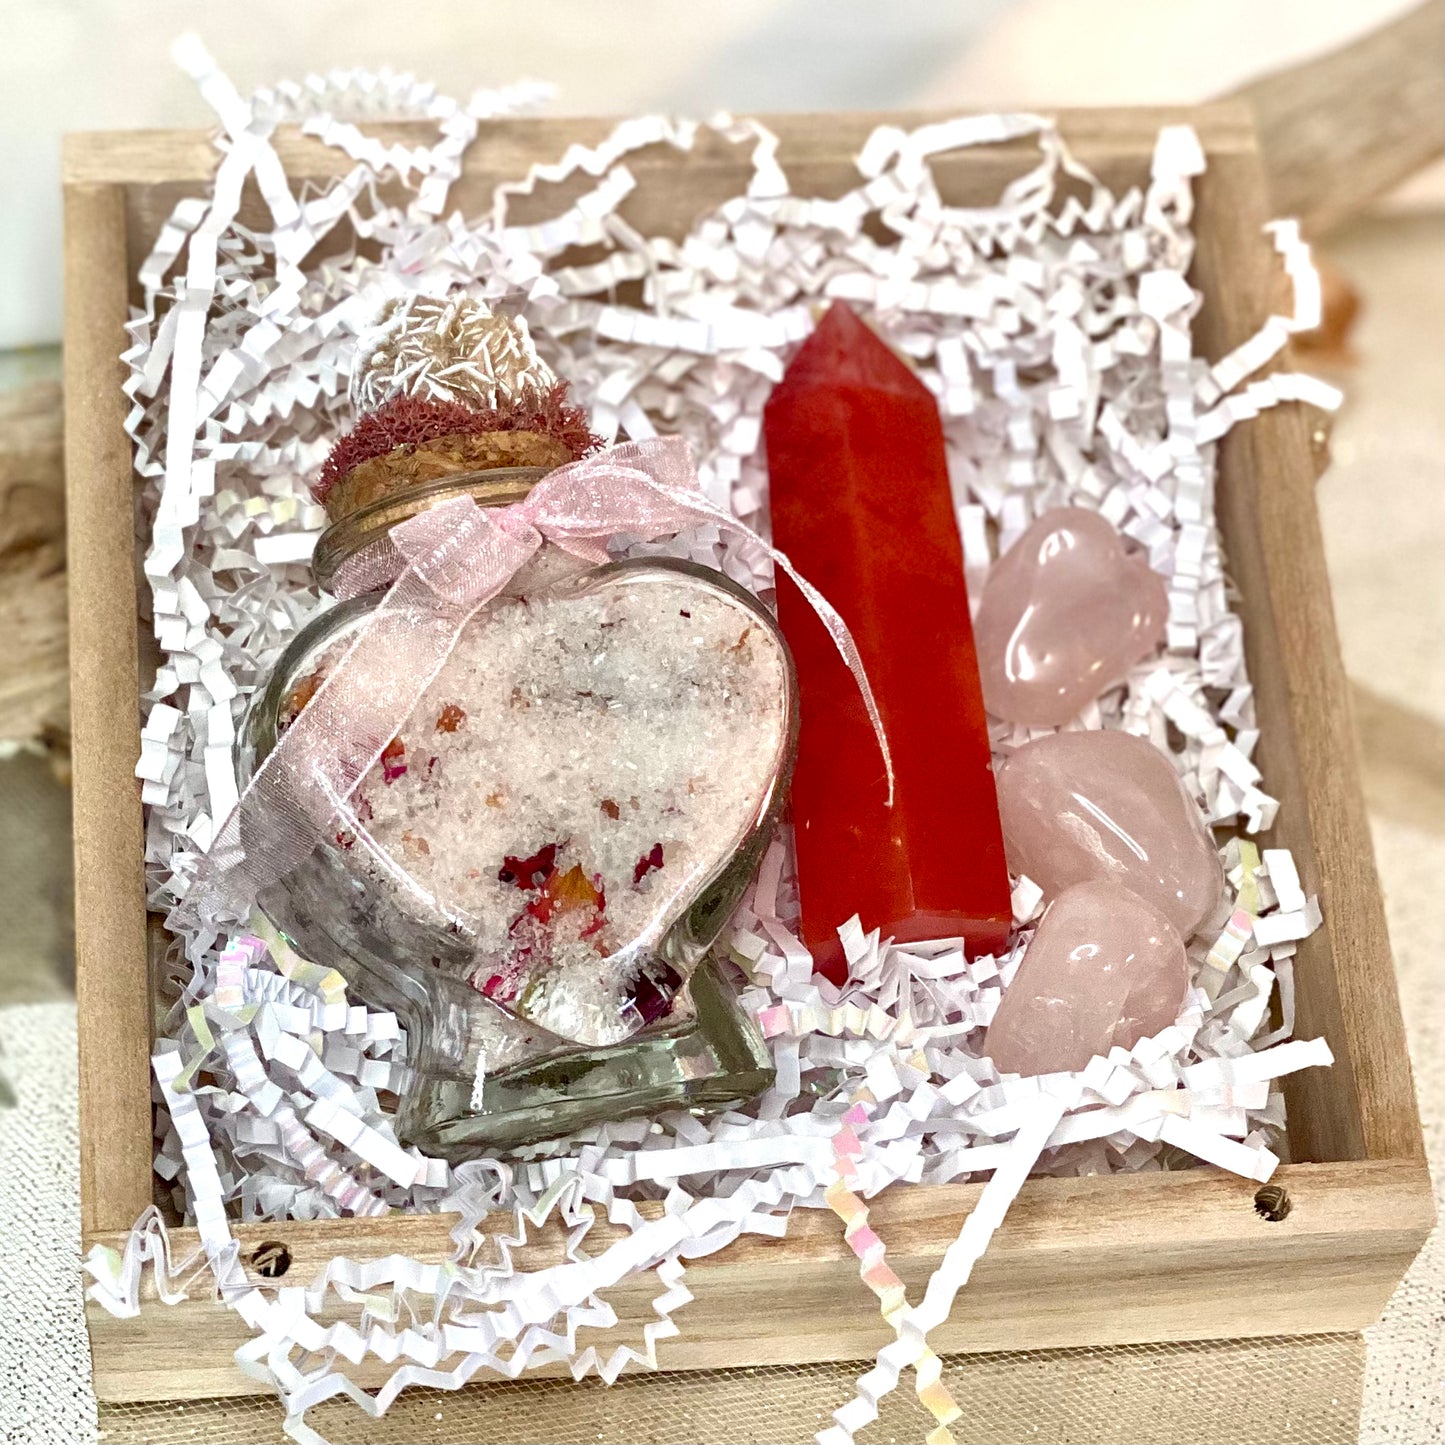 Serenity Gift Set: Custom Bath Salts with Heart-Shaped Crystal Jar, Watermelon Quartz Tower, and Rose Quartz Crystals